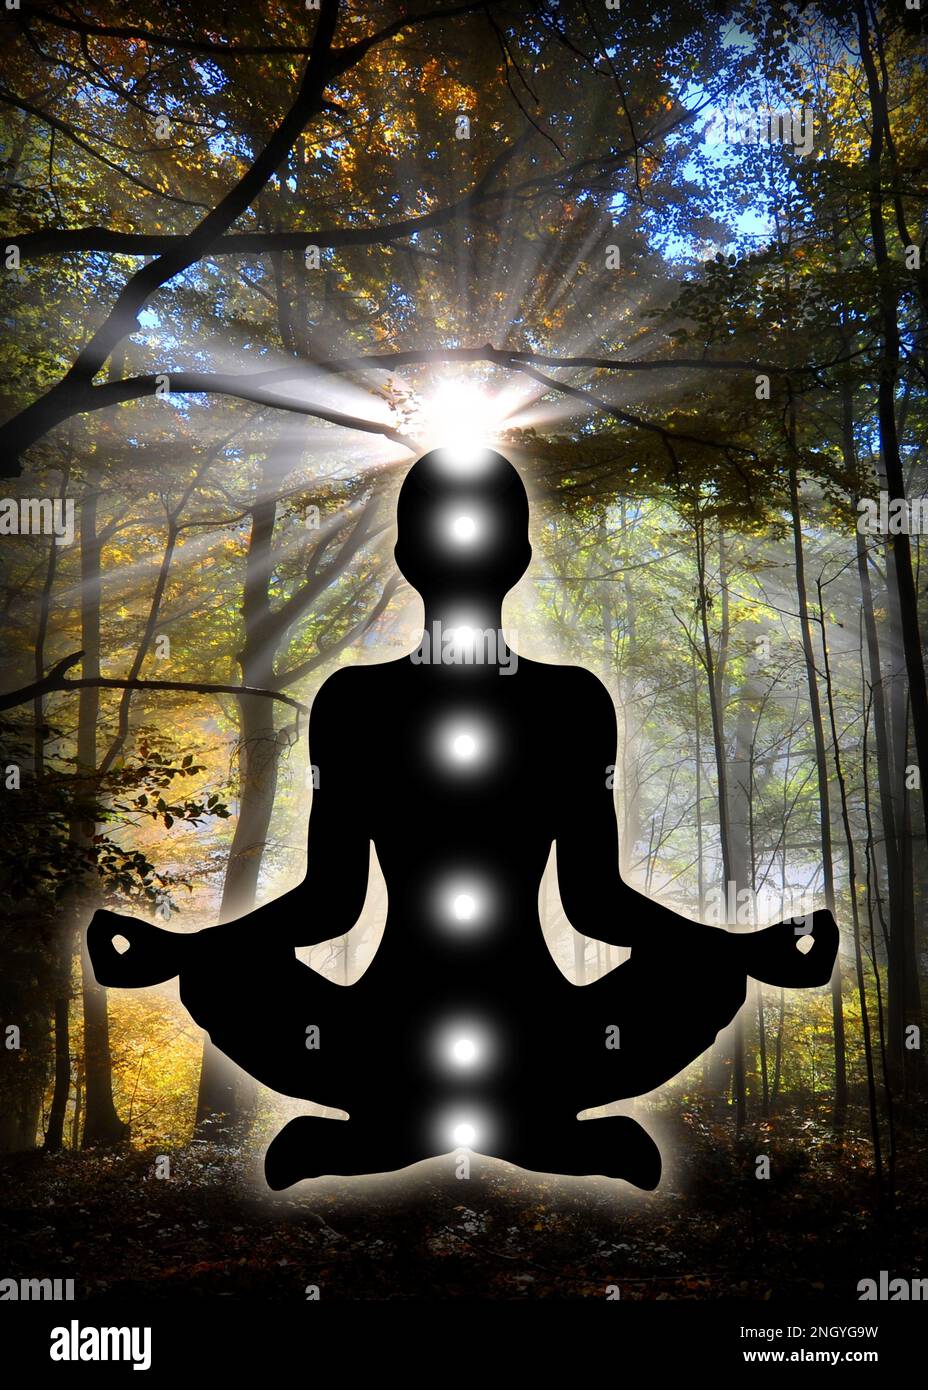 Human silhouette in yoga / lotus pose with 7 Chakras Symbols and Flower of Life. (Human energy body, aura, yoga lotus pose). Stock Photo